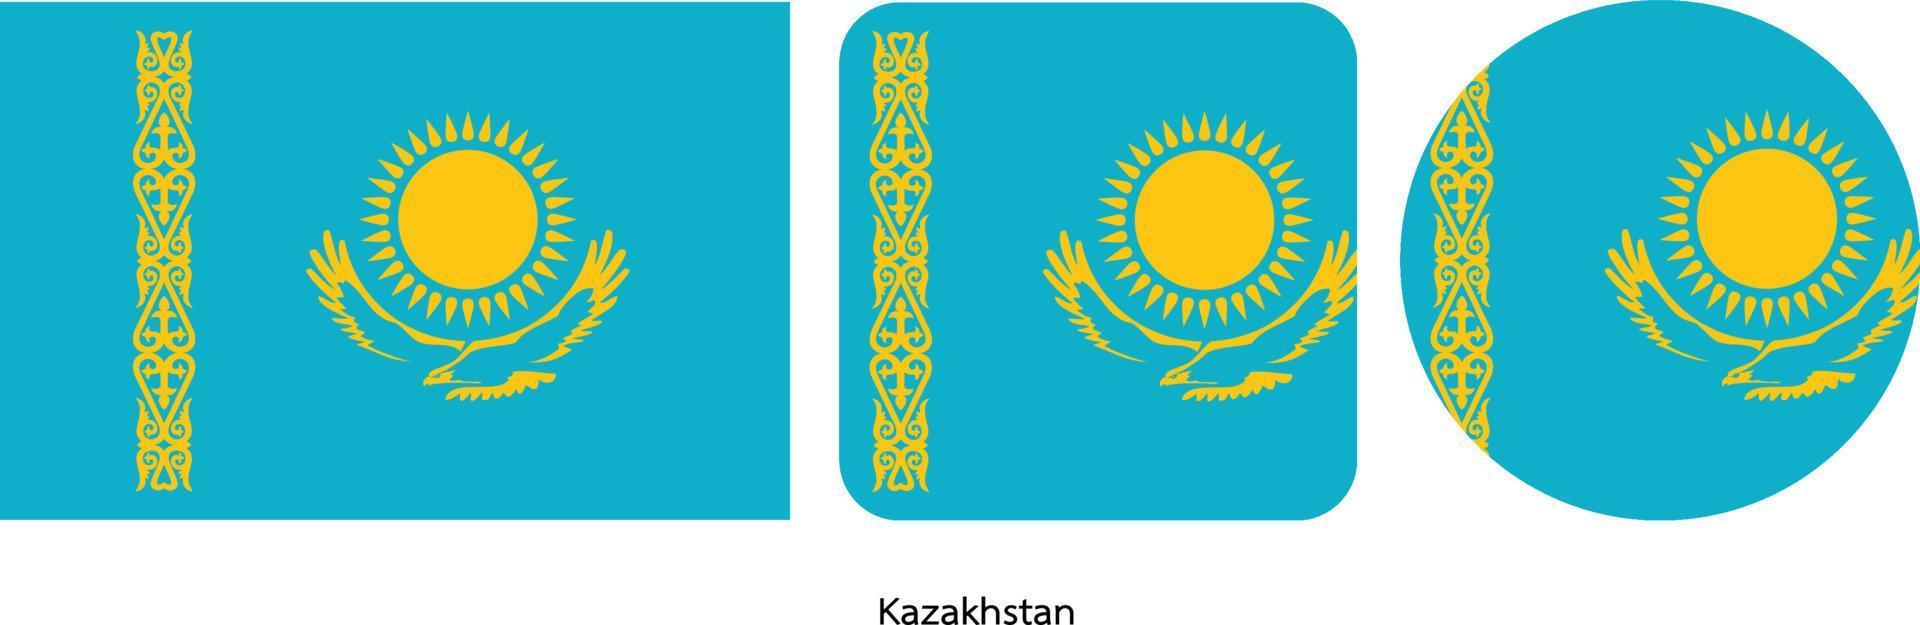 Kazakstans flagga, vektorillustration vektor